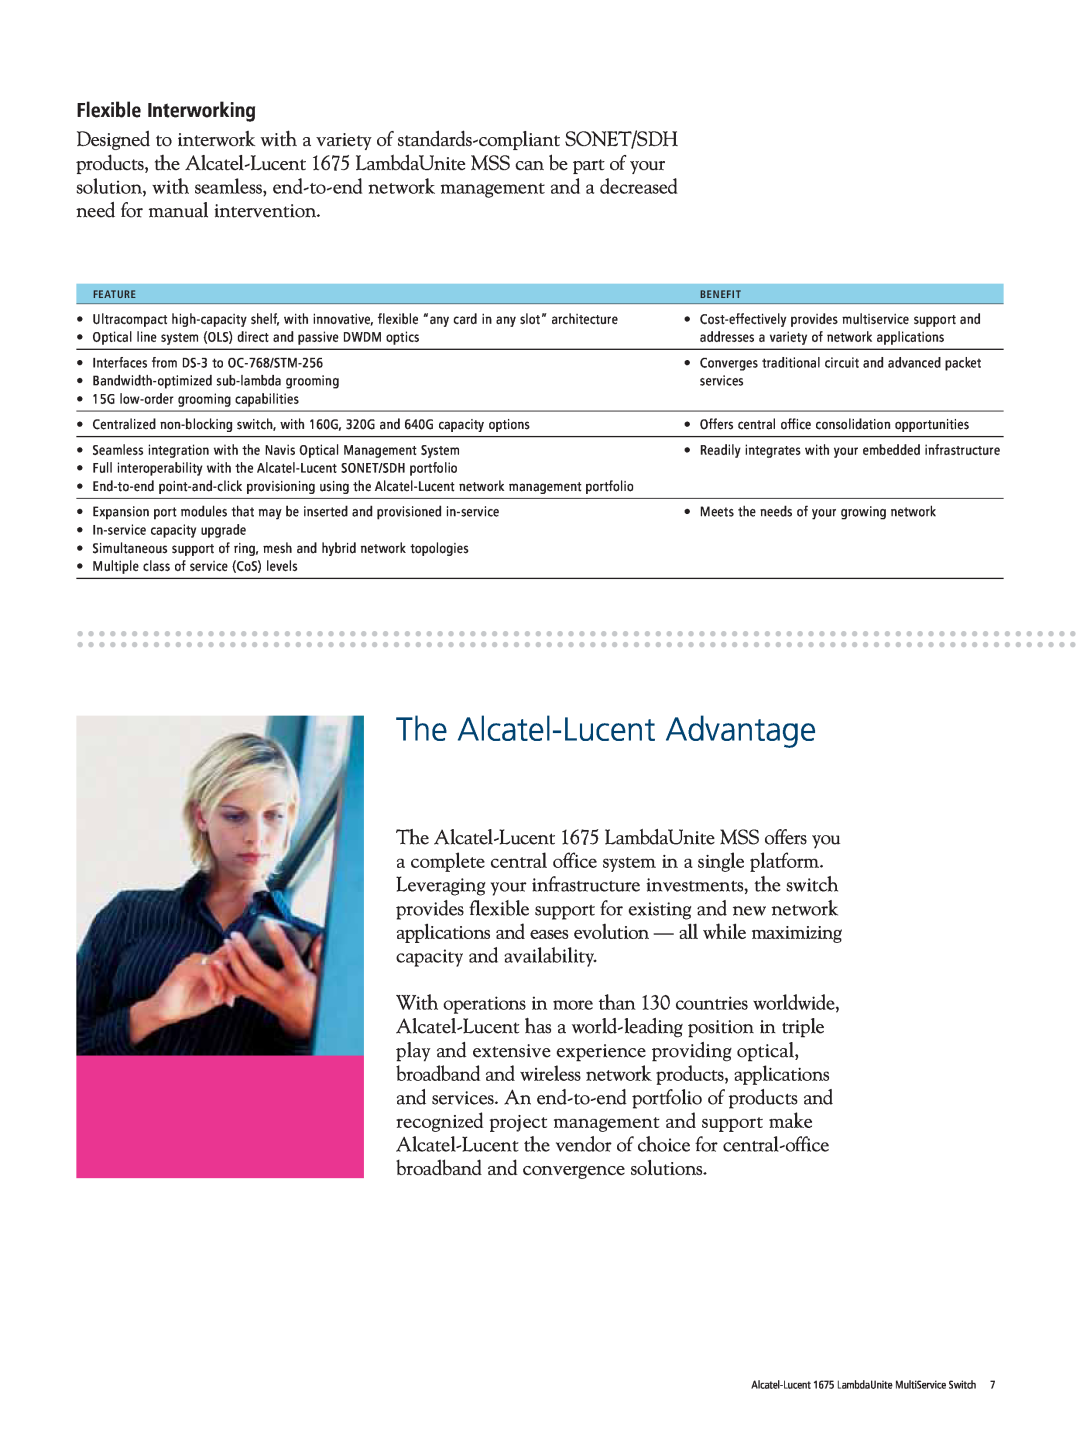 Alcatel-Lucent 1675 manual The Alcatel-Lucent Advantage, Flexible Interworking 